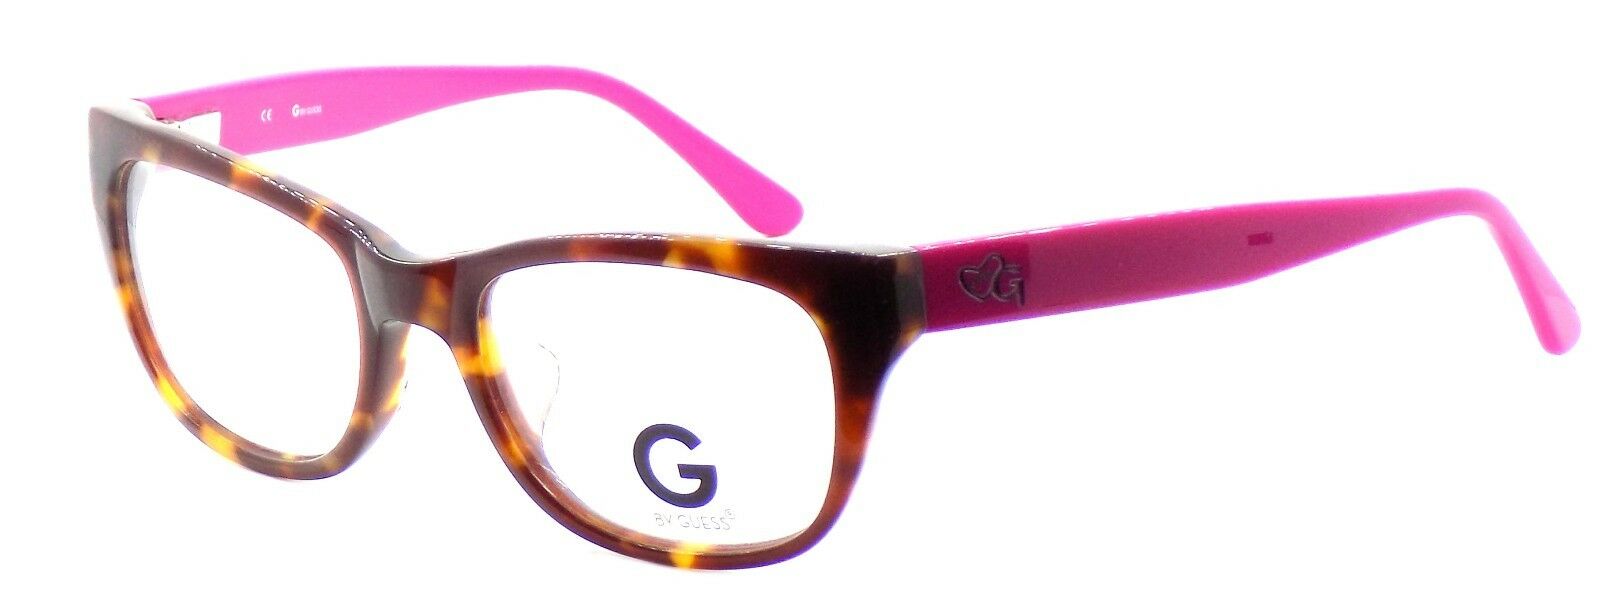 1-G by Guess GGA102 TOPK Women's ASIAN FIT Eyeglasses Frames 52-19-135 Tortoise-715583638112-IKSpecs